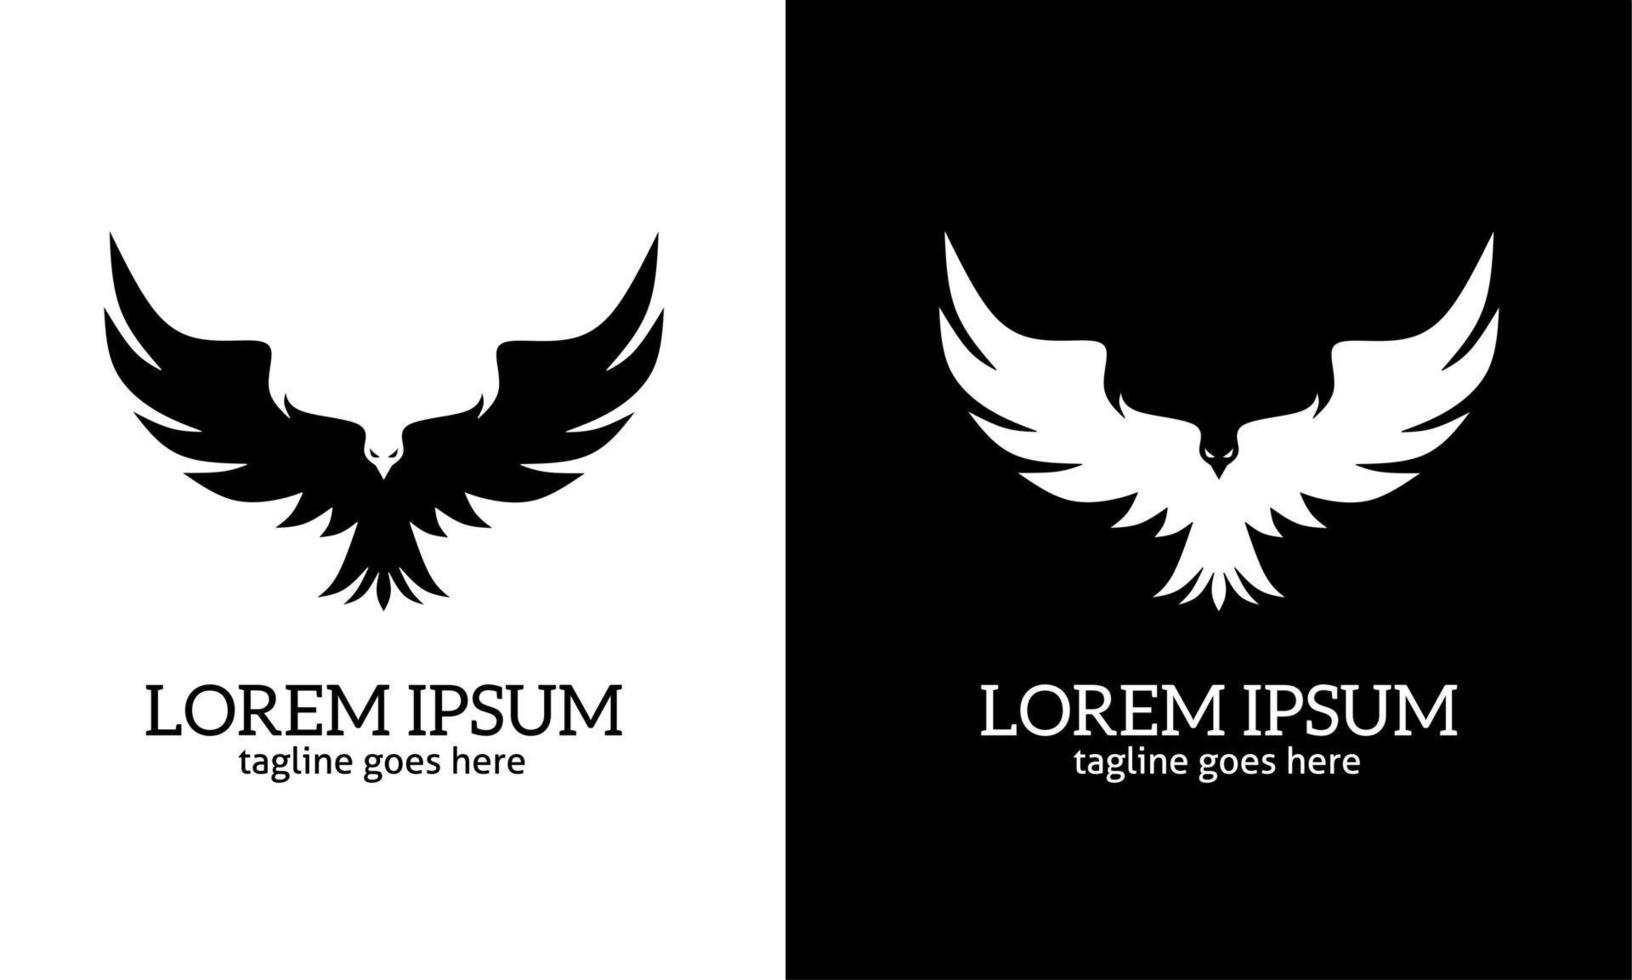 plantilla de logotipo de águila con dos alas extendidas simple vector